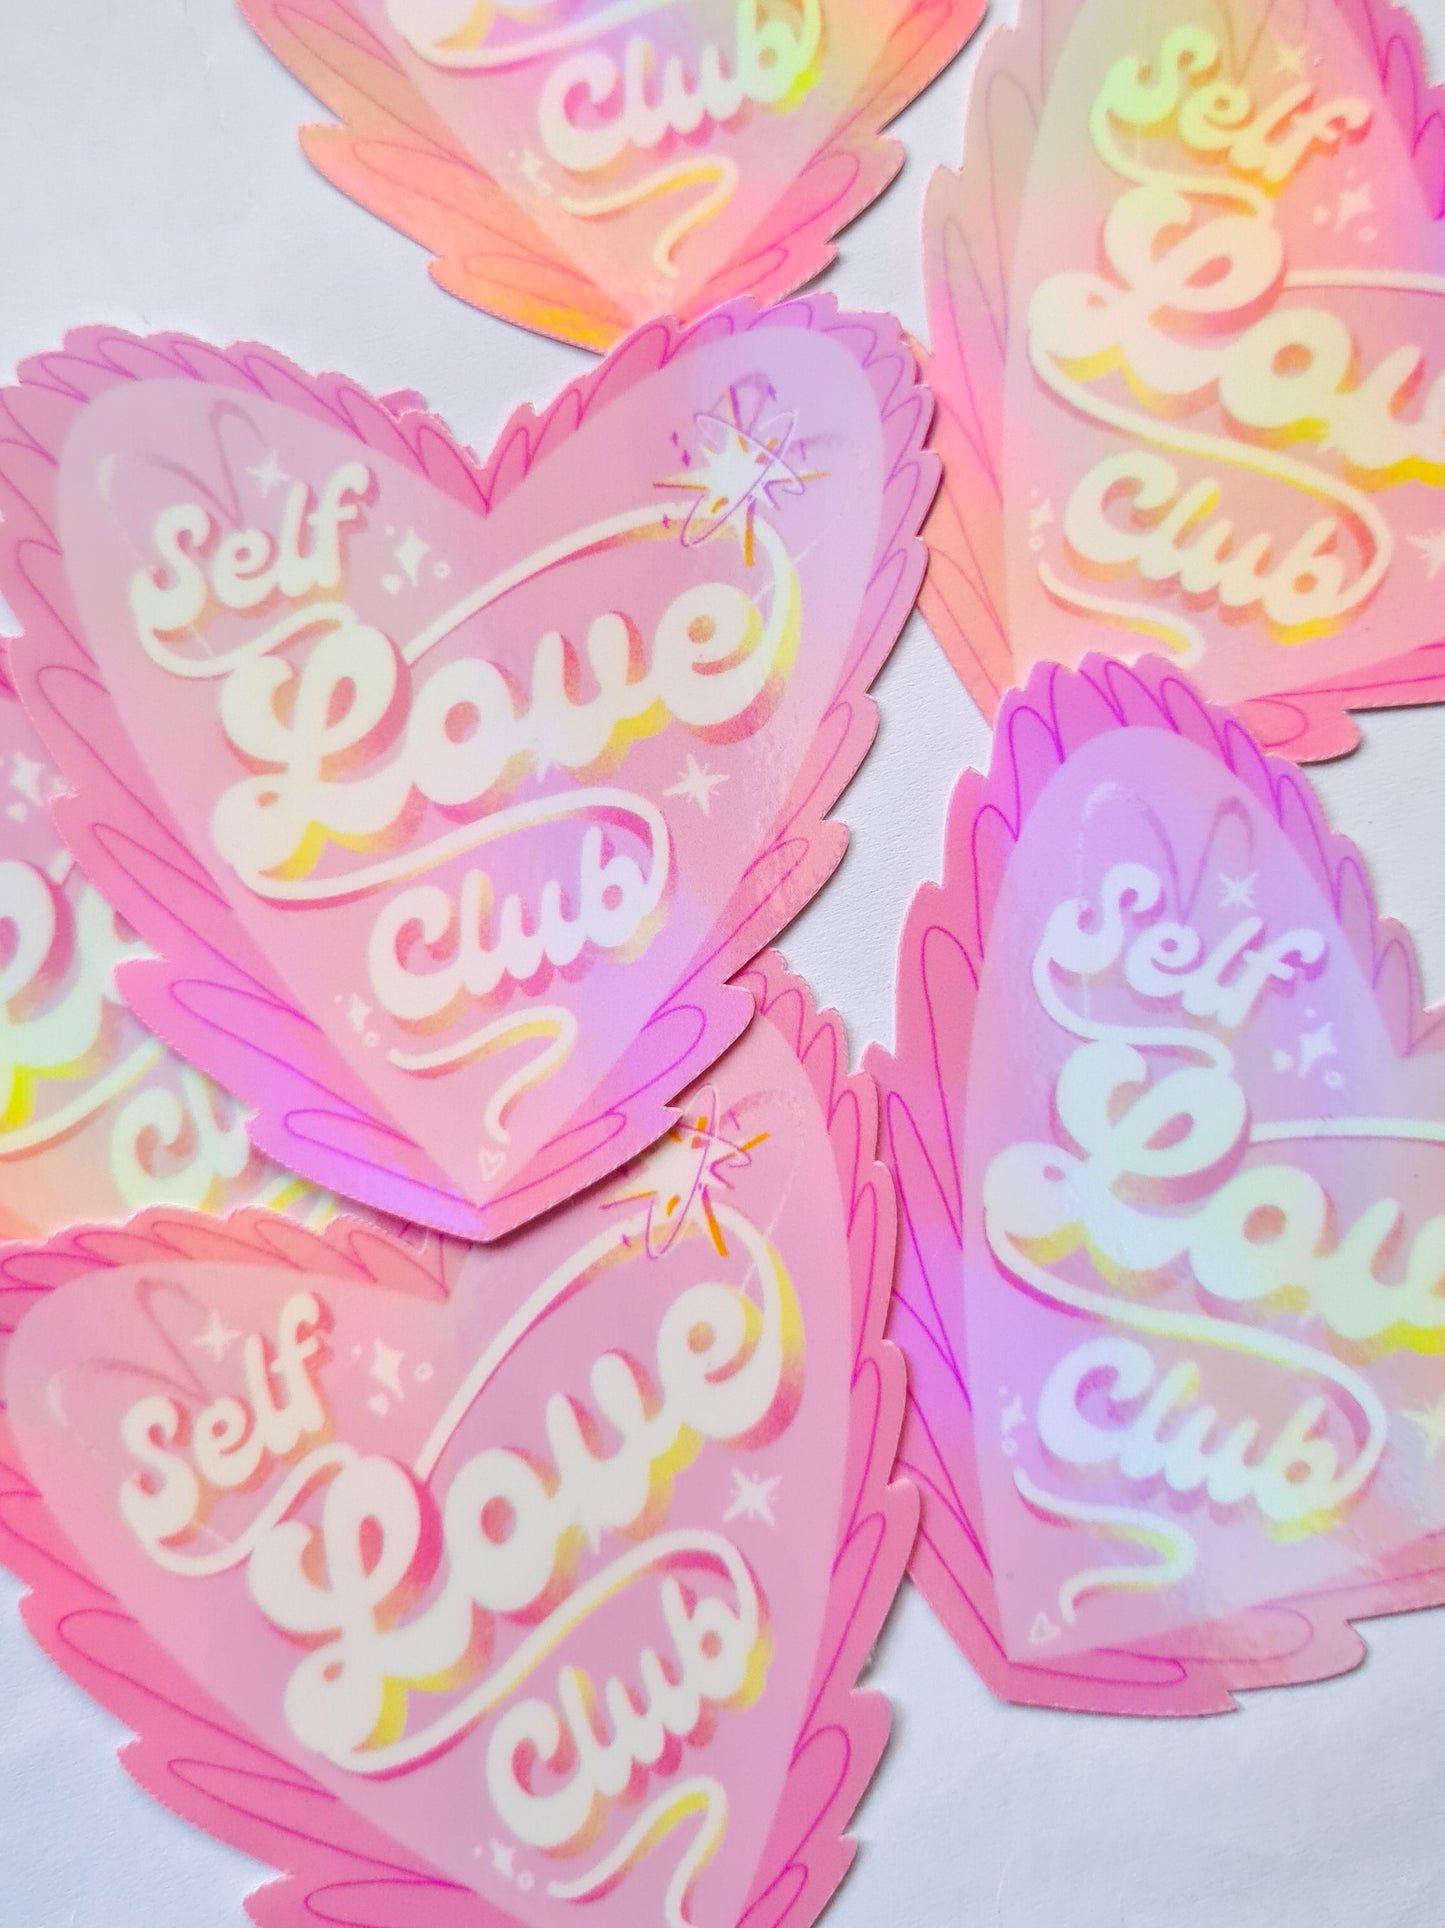 Self Love Club type sticker - Woman Create